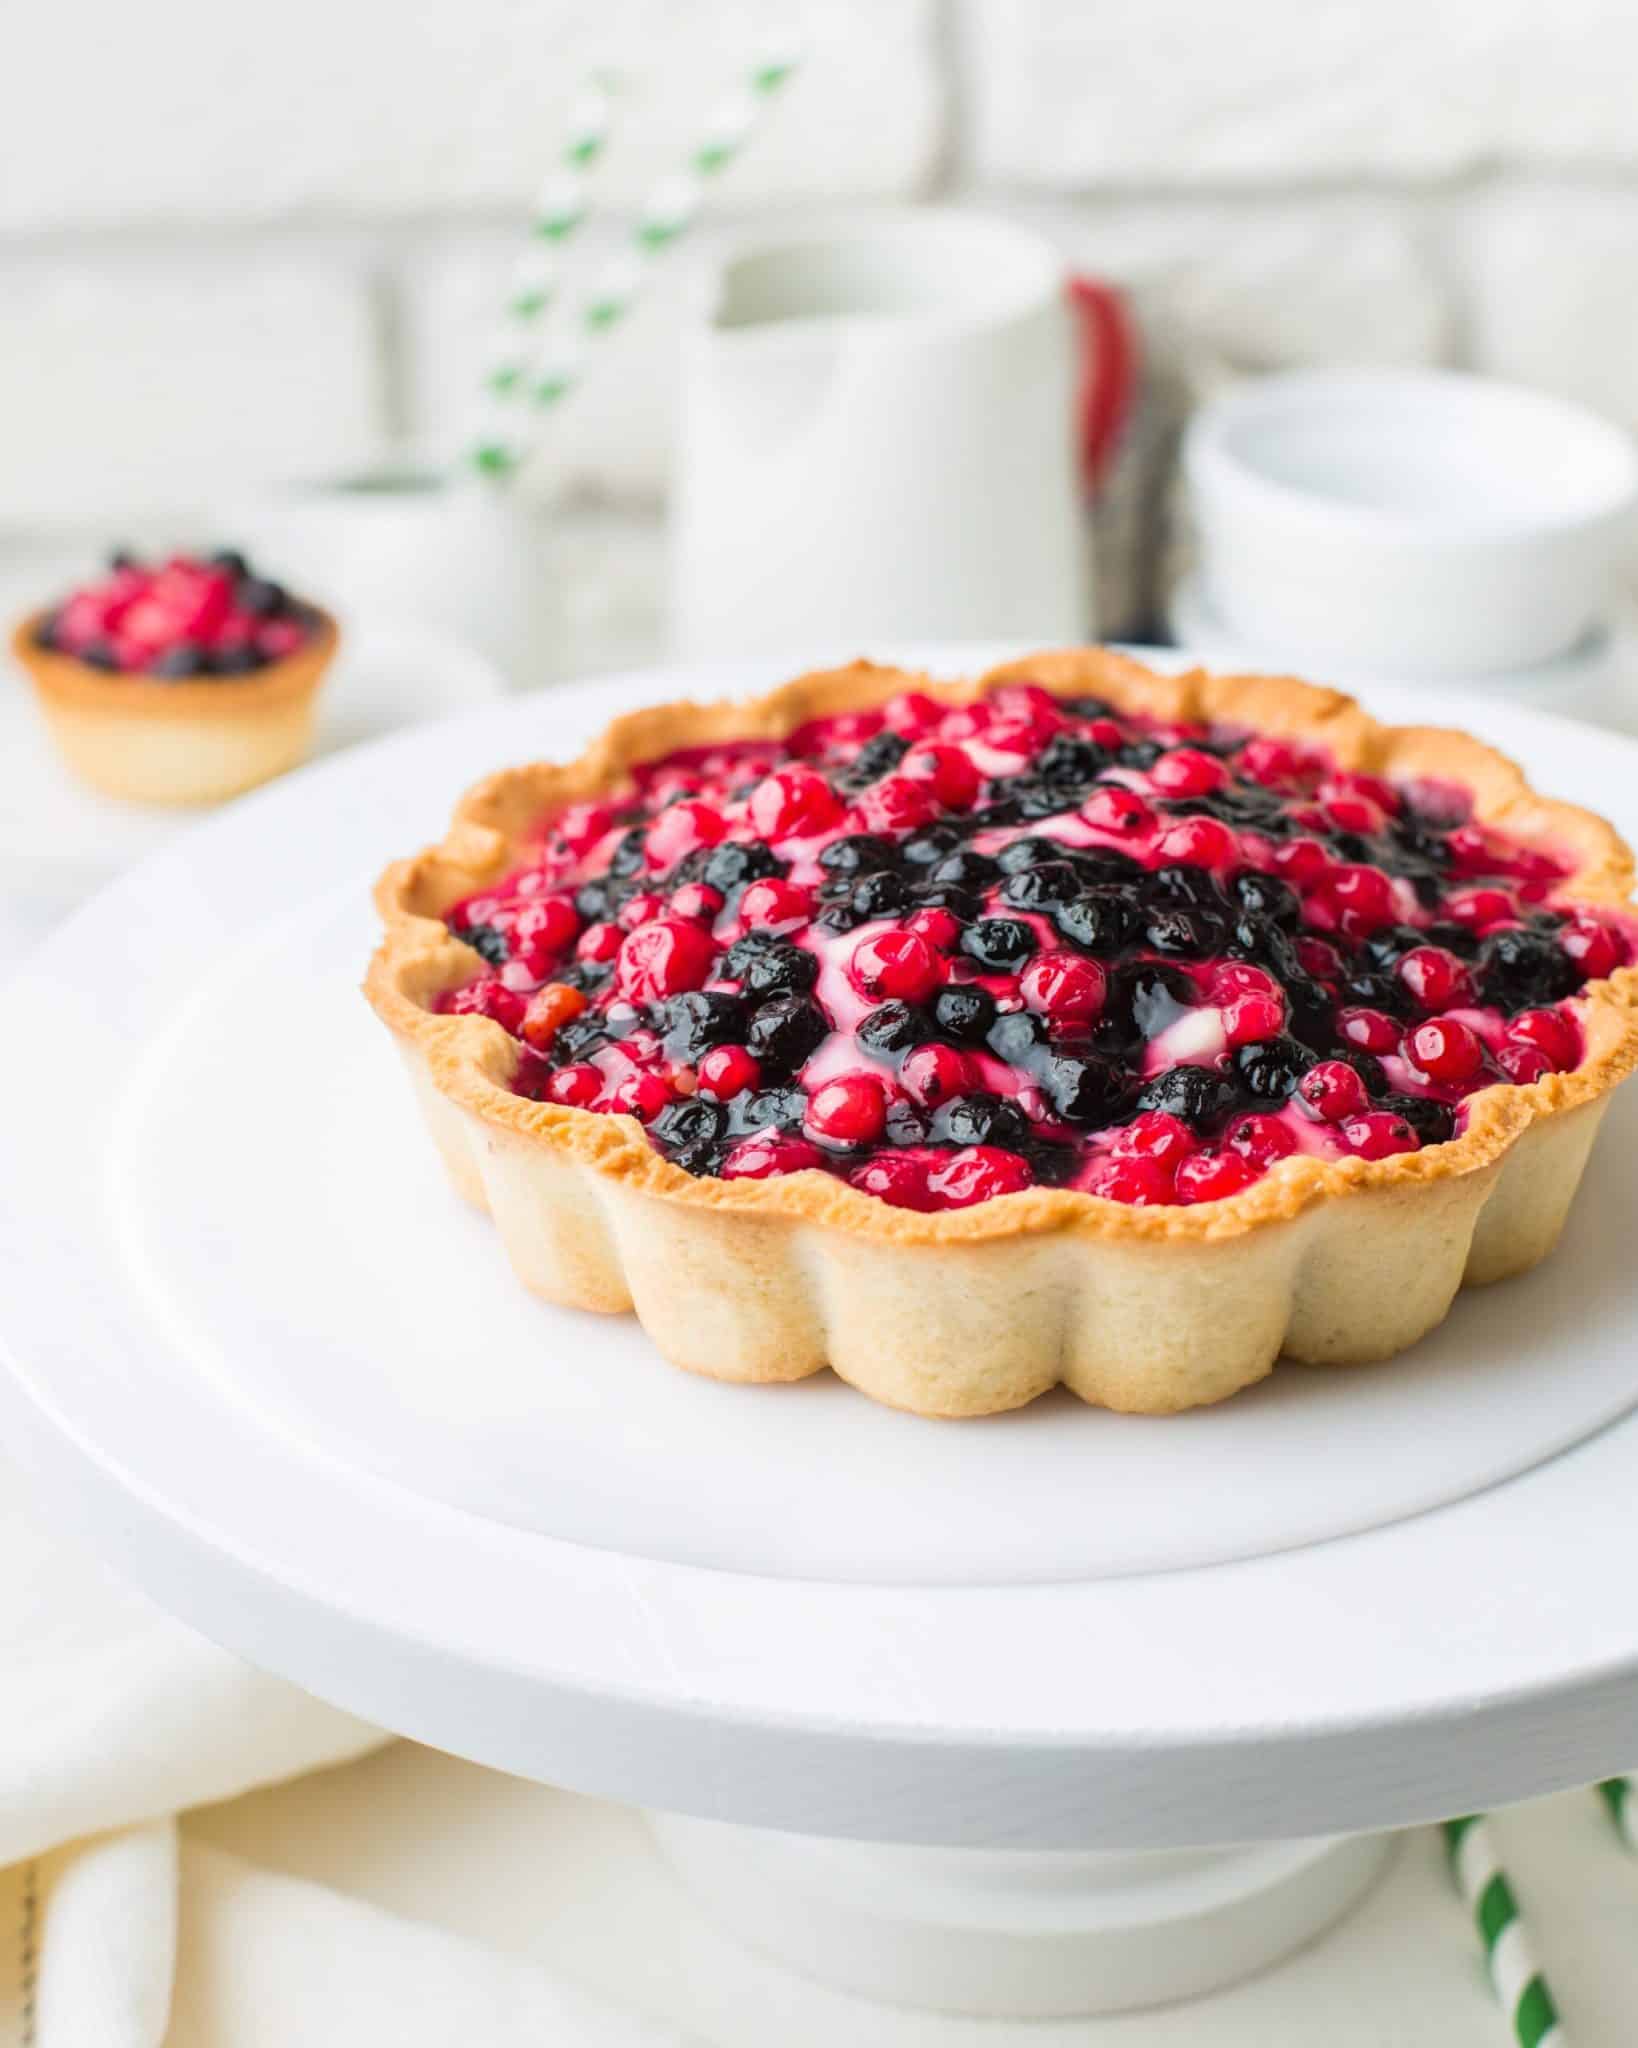 Bursting with Flavor: Berry Tart Pie - A Sweet Delight! - 99 rezepte